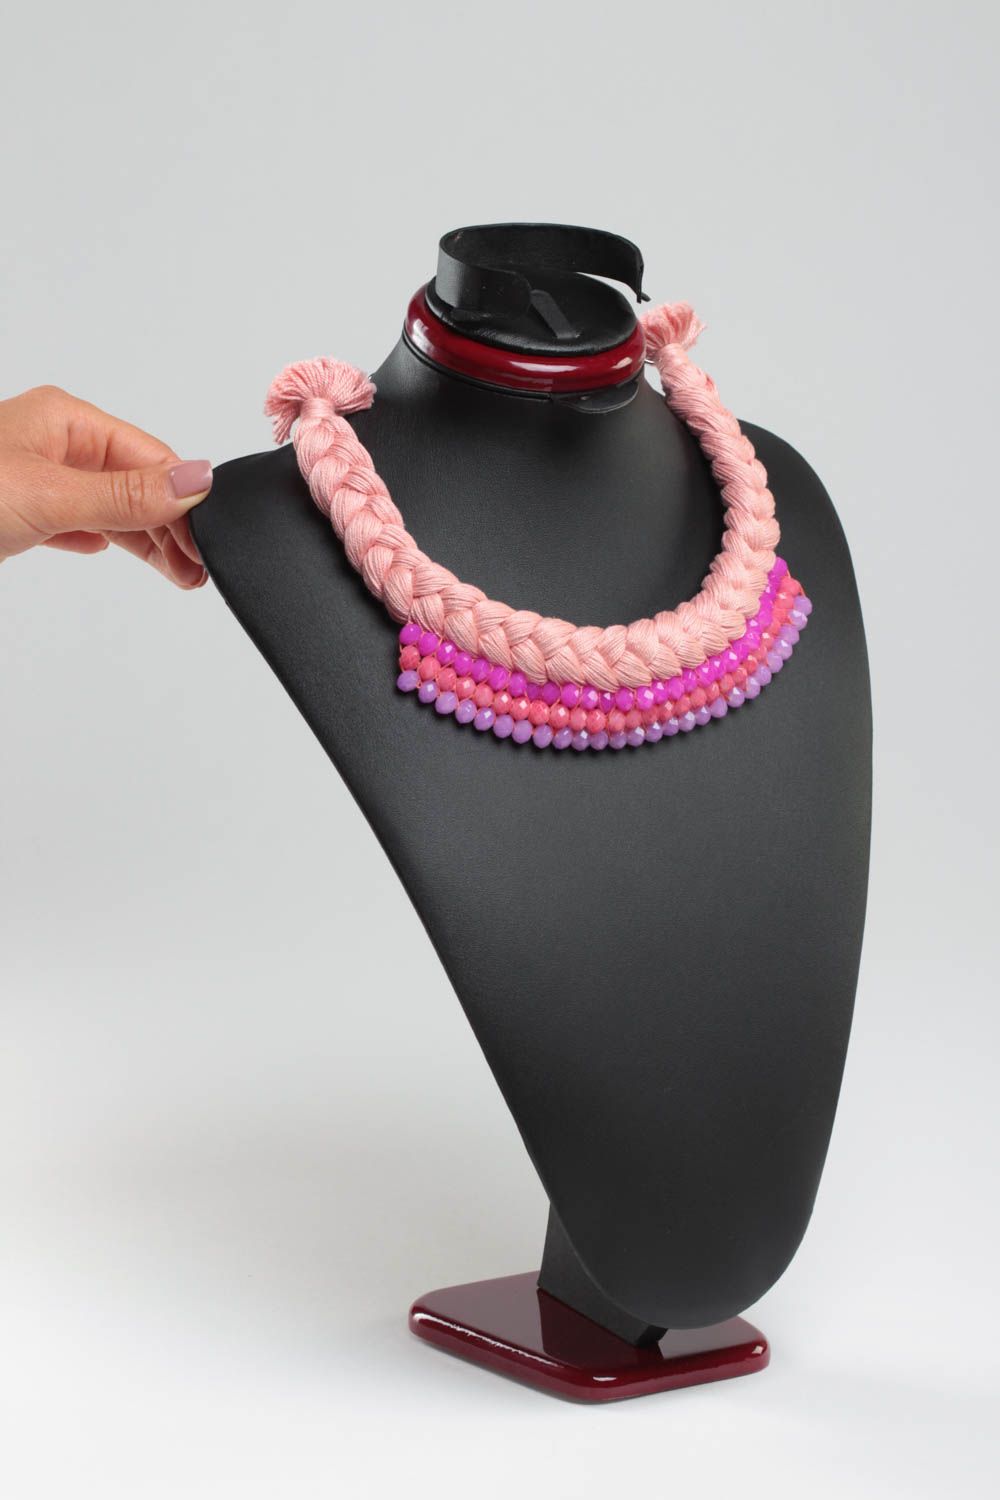 Handmade neckalce designer accessory gift ideas unusual jewelry gift for her photo 5